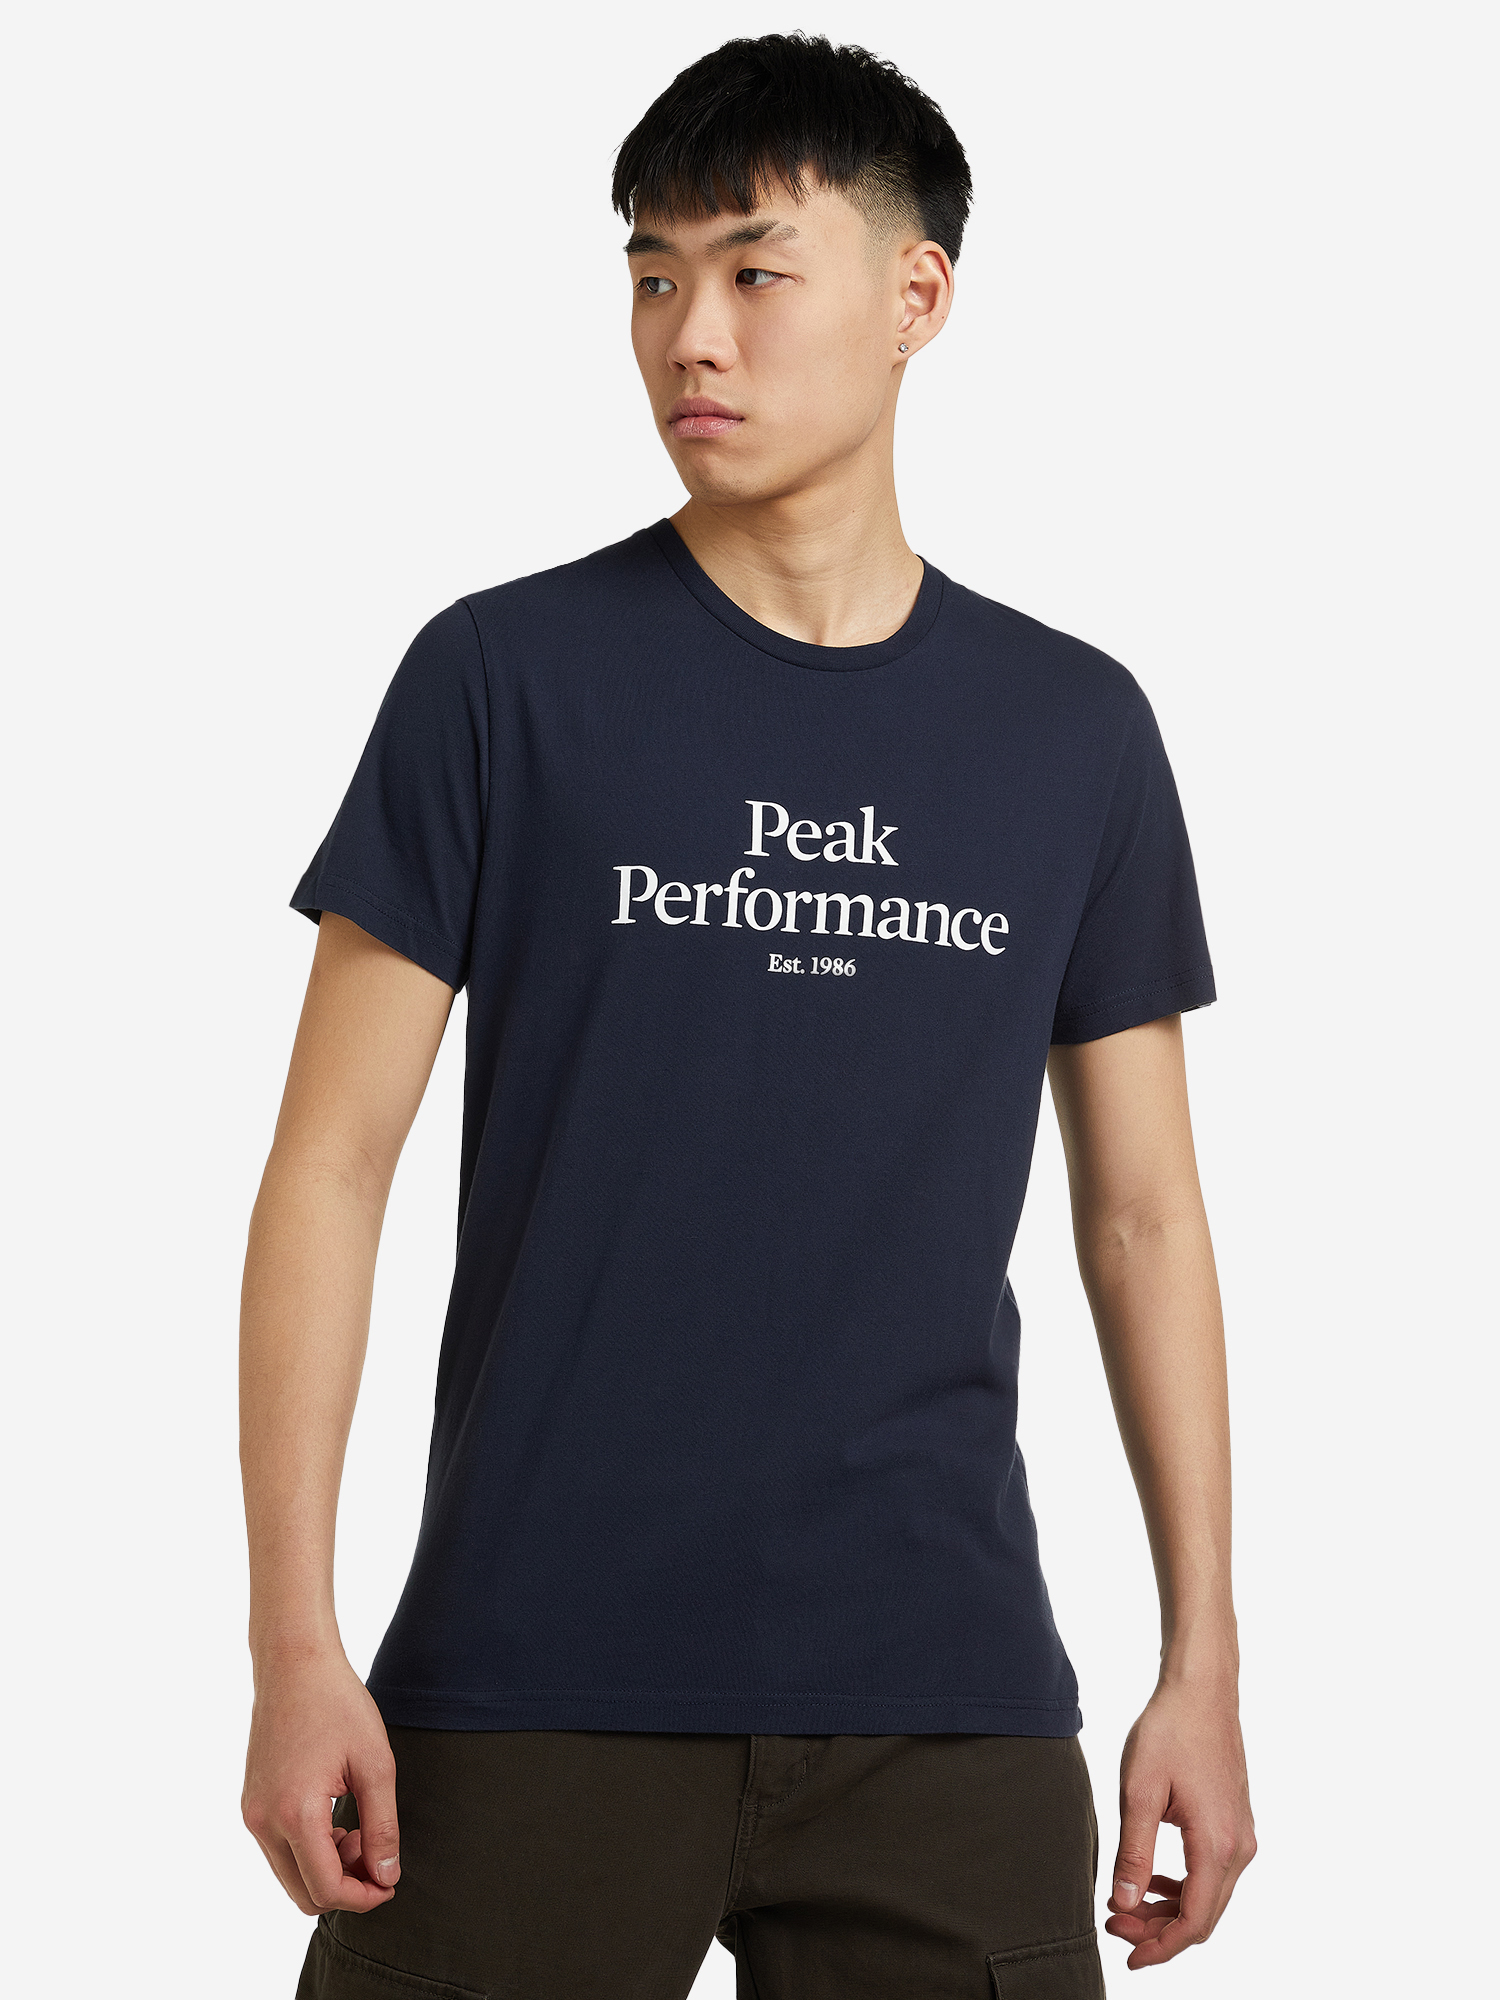 Футболка мужская Peak Performance Original, Синий рубашка мужская peak performance синий